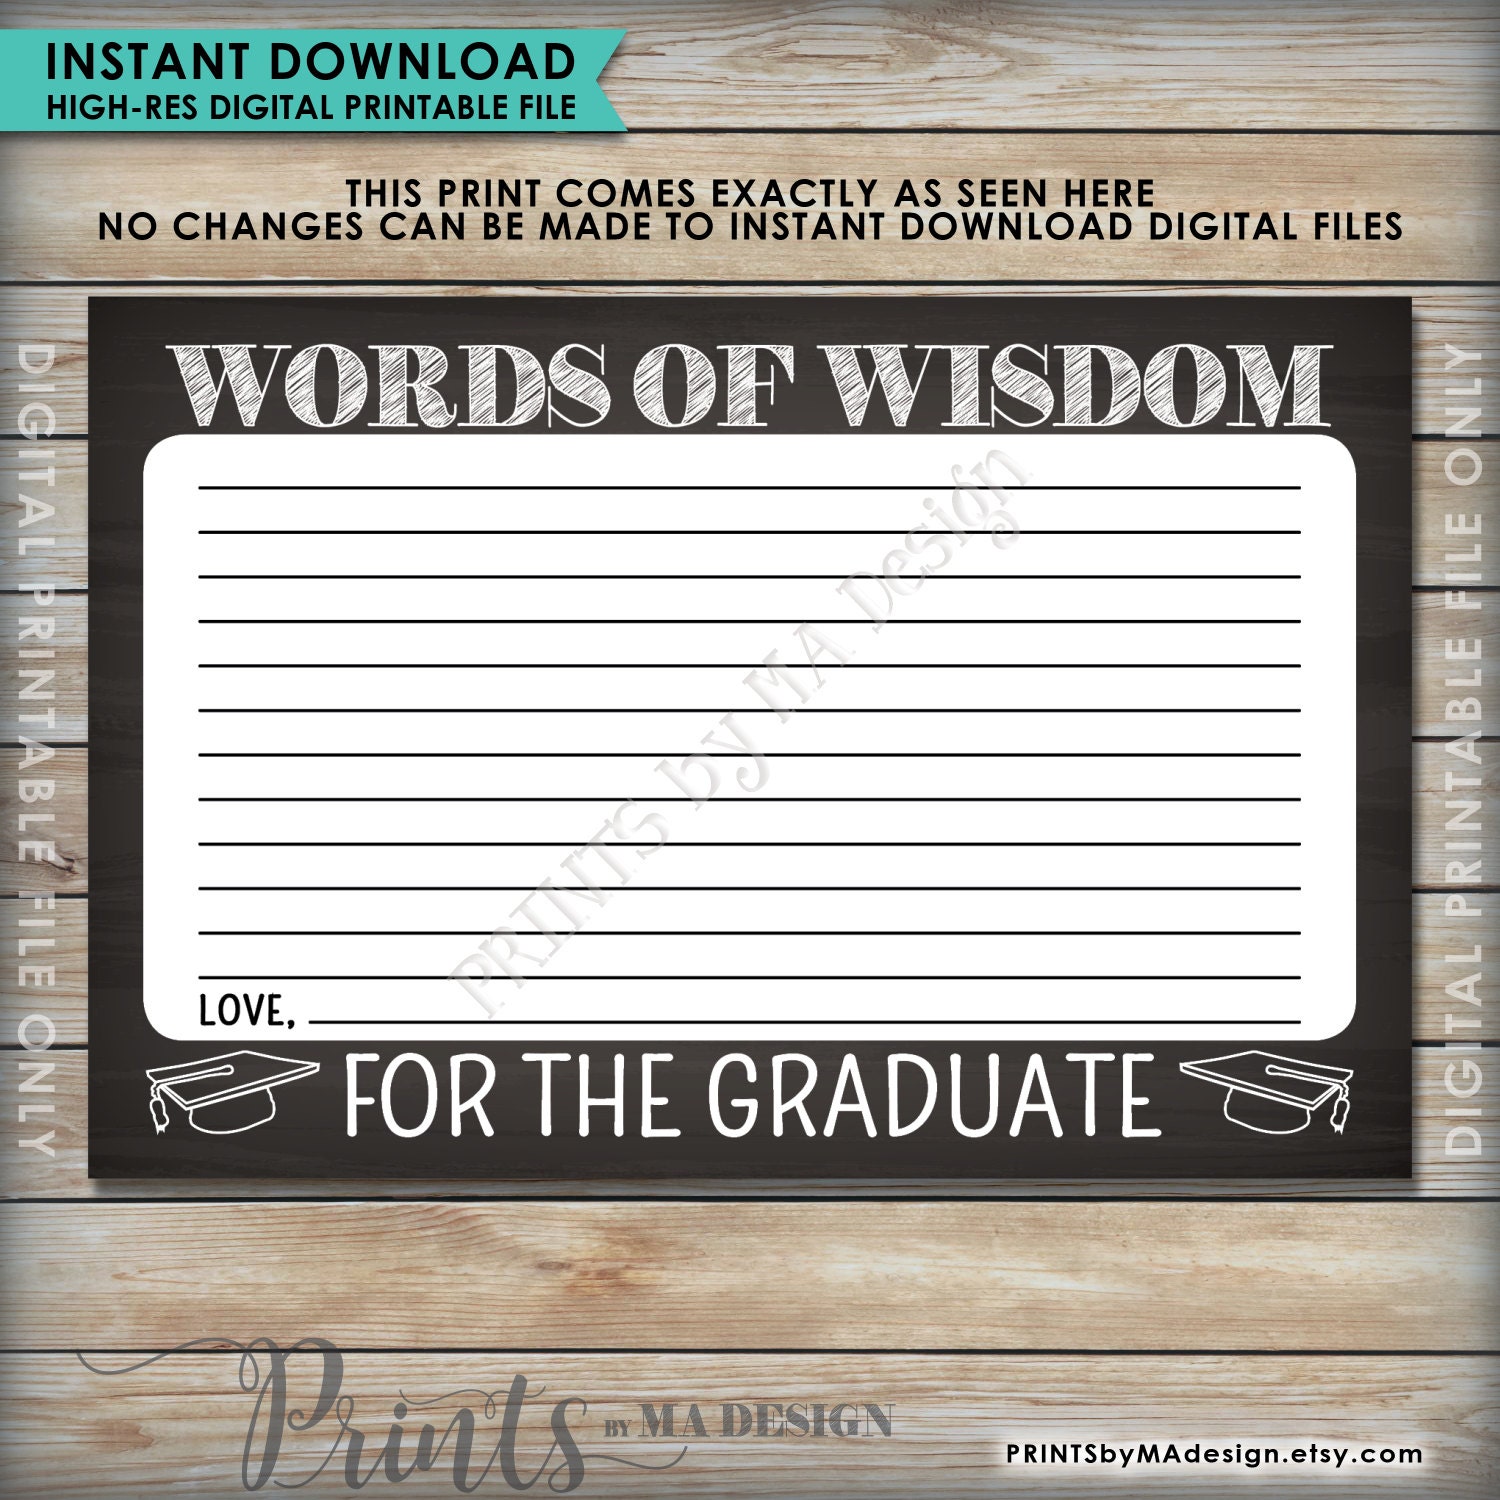 Advice For Graduate Words Of Wisdom For The Graduate Printable